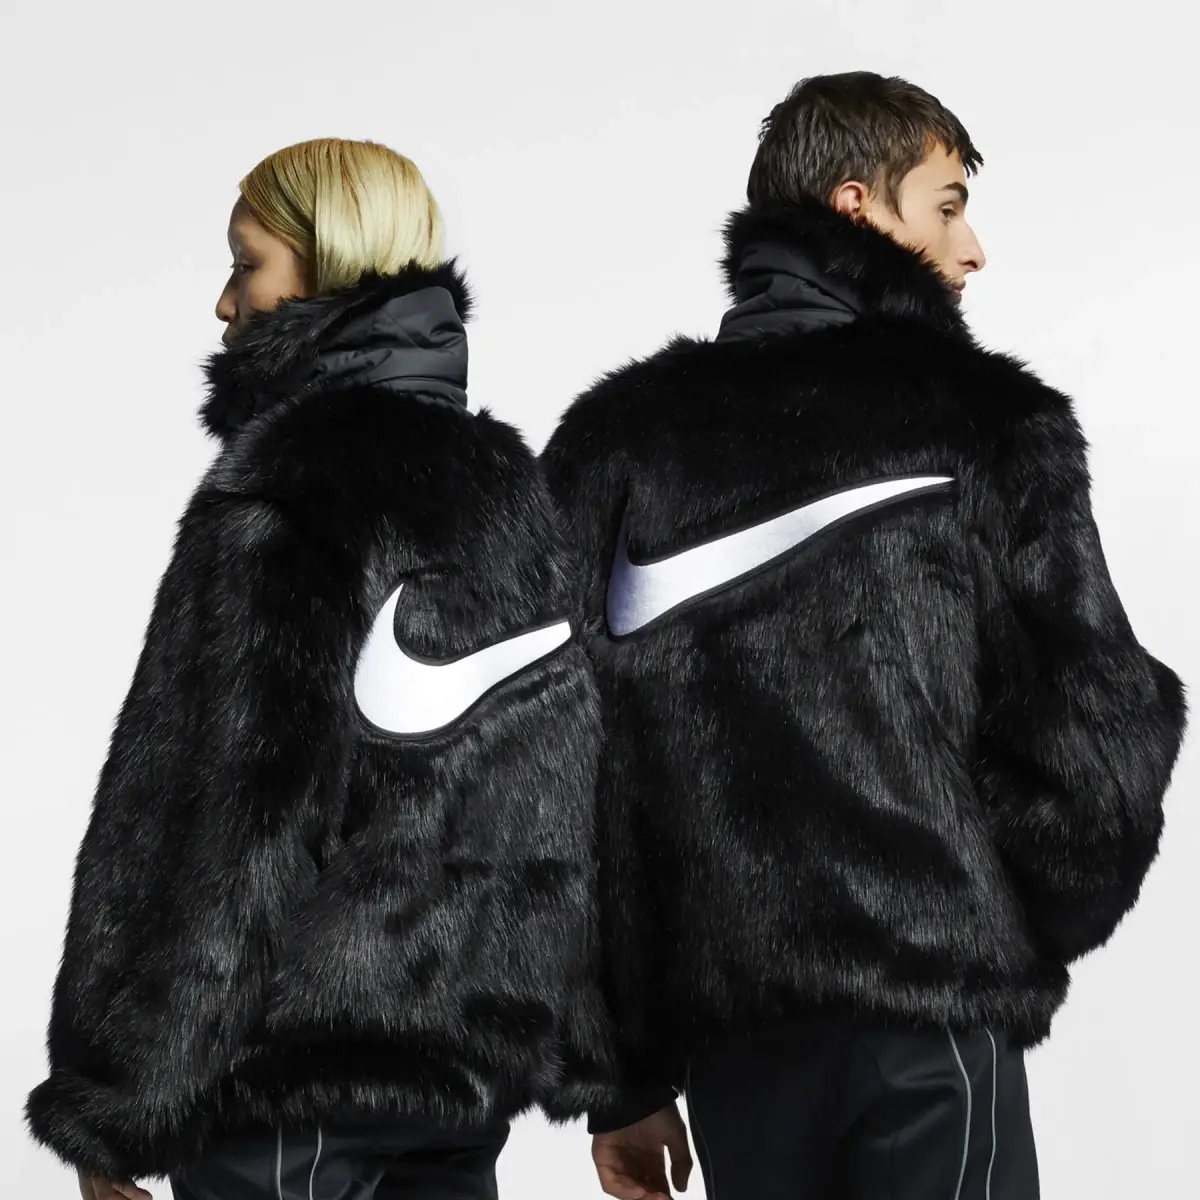 AMBUSH x Nike Faux Fur Reversible Jacket Black